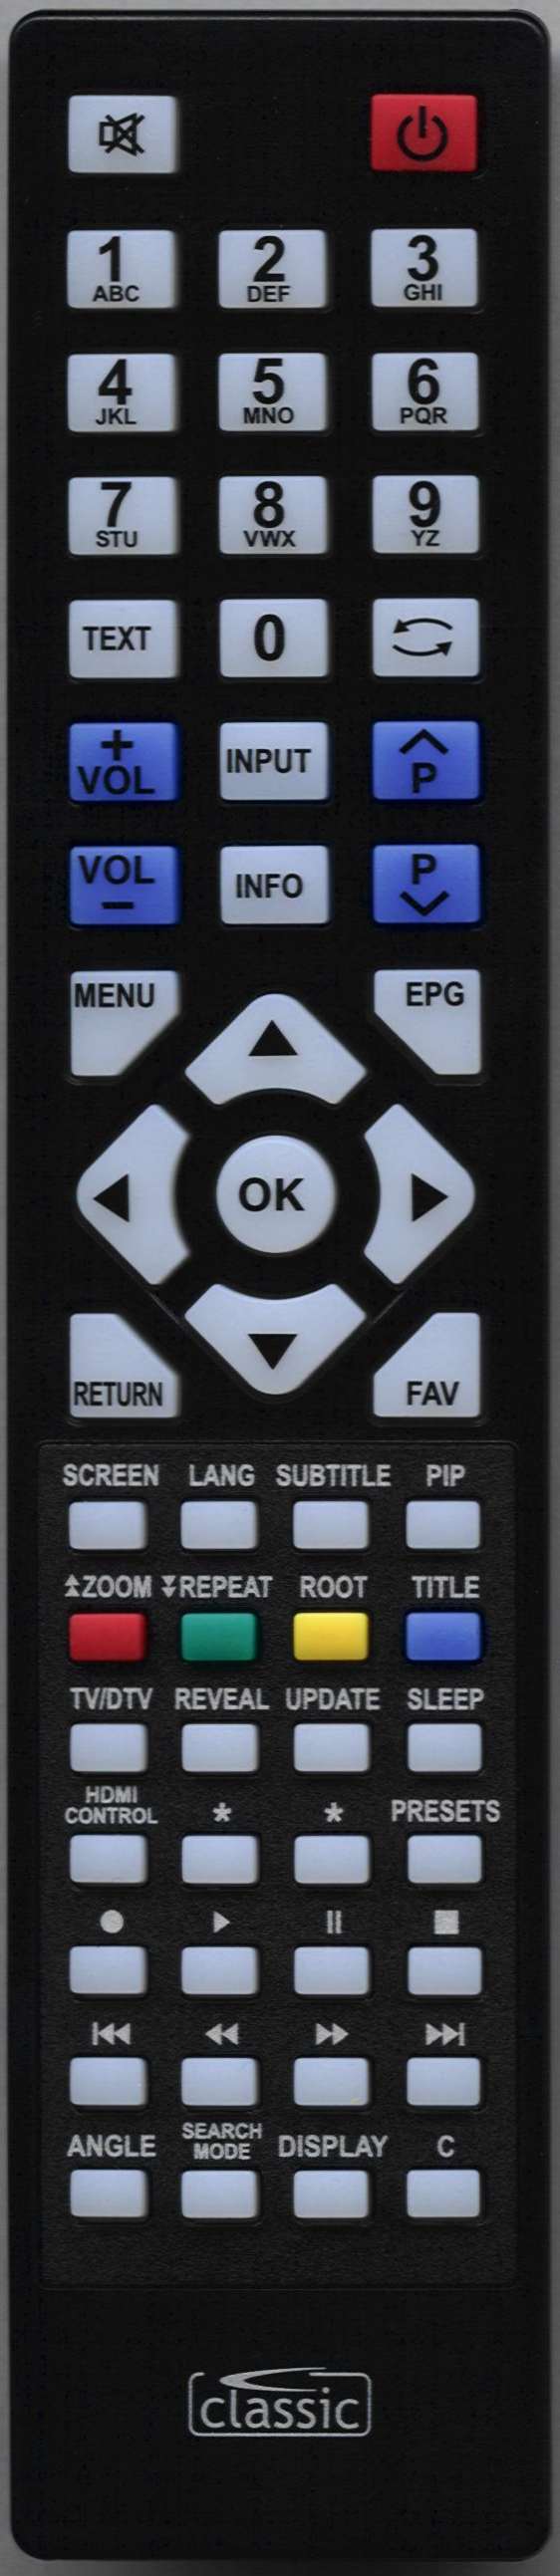 DIGIHOME 19822WHDDVDDIGITAL Remote Control Alternative